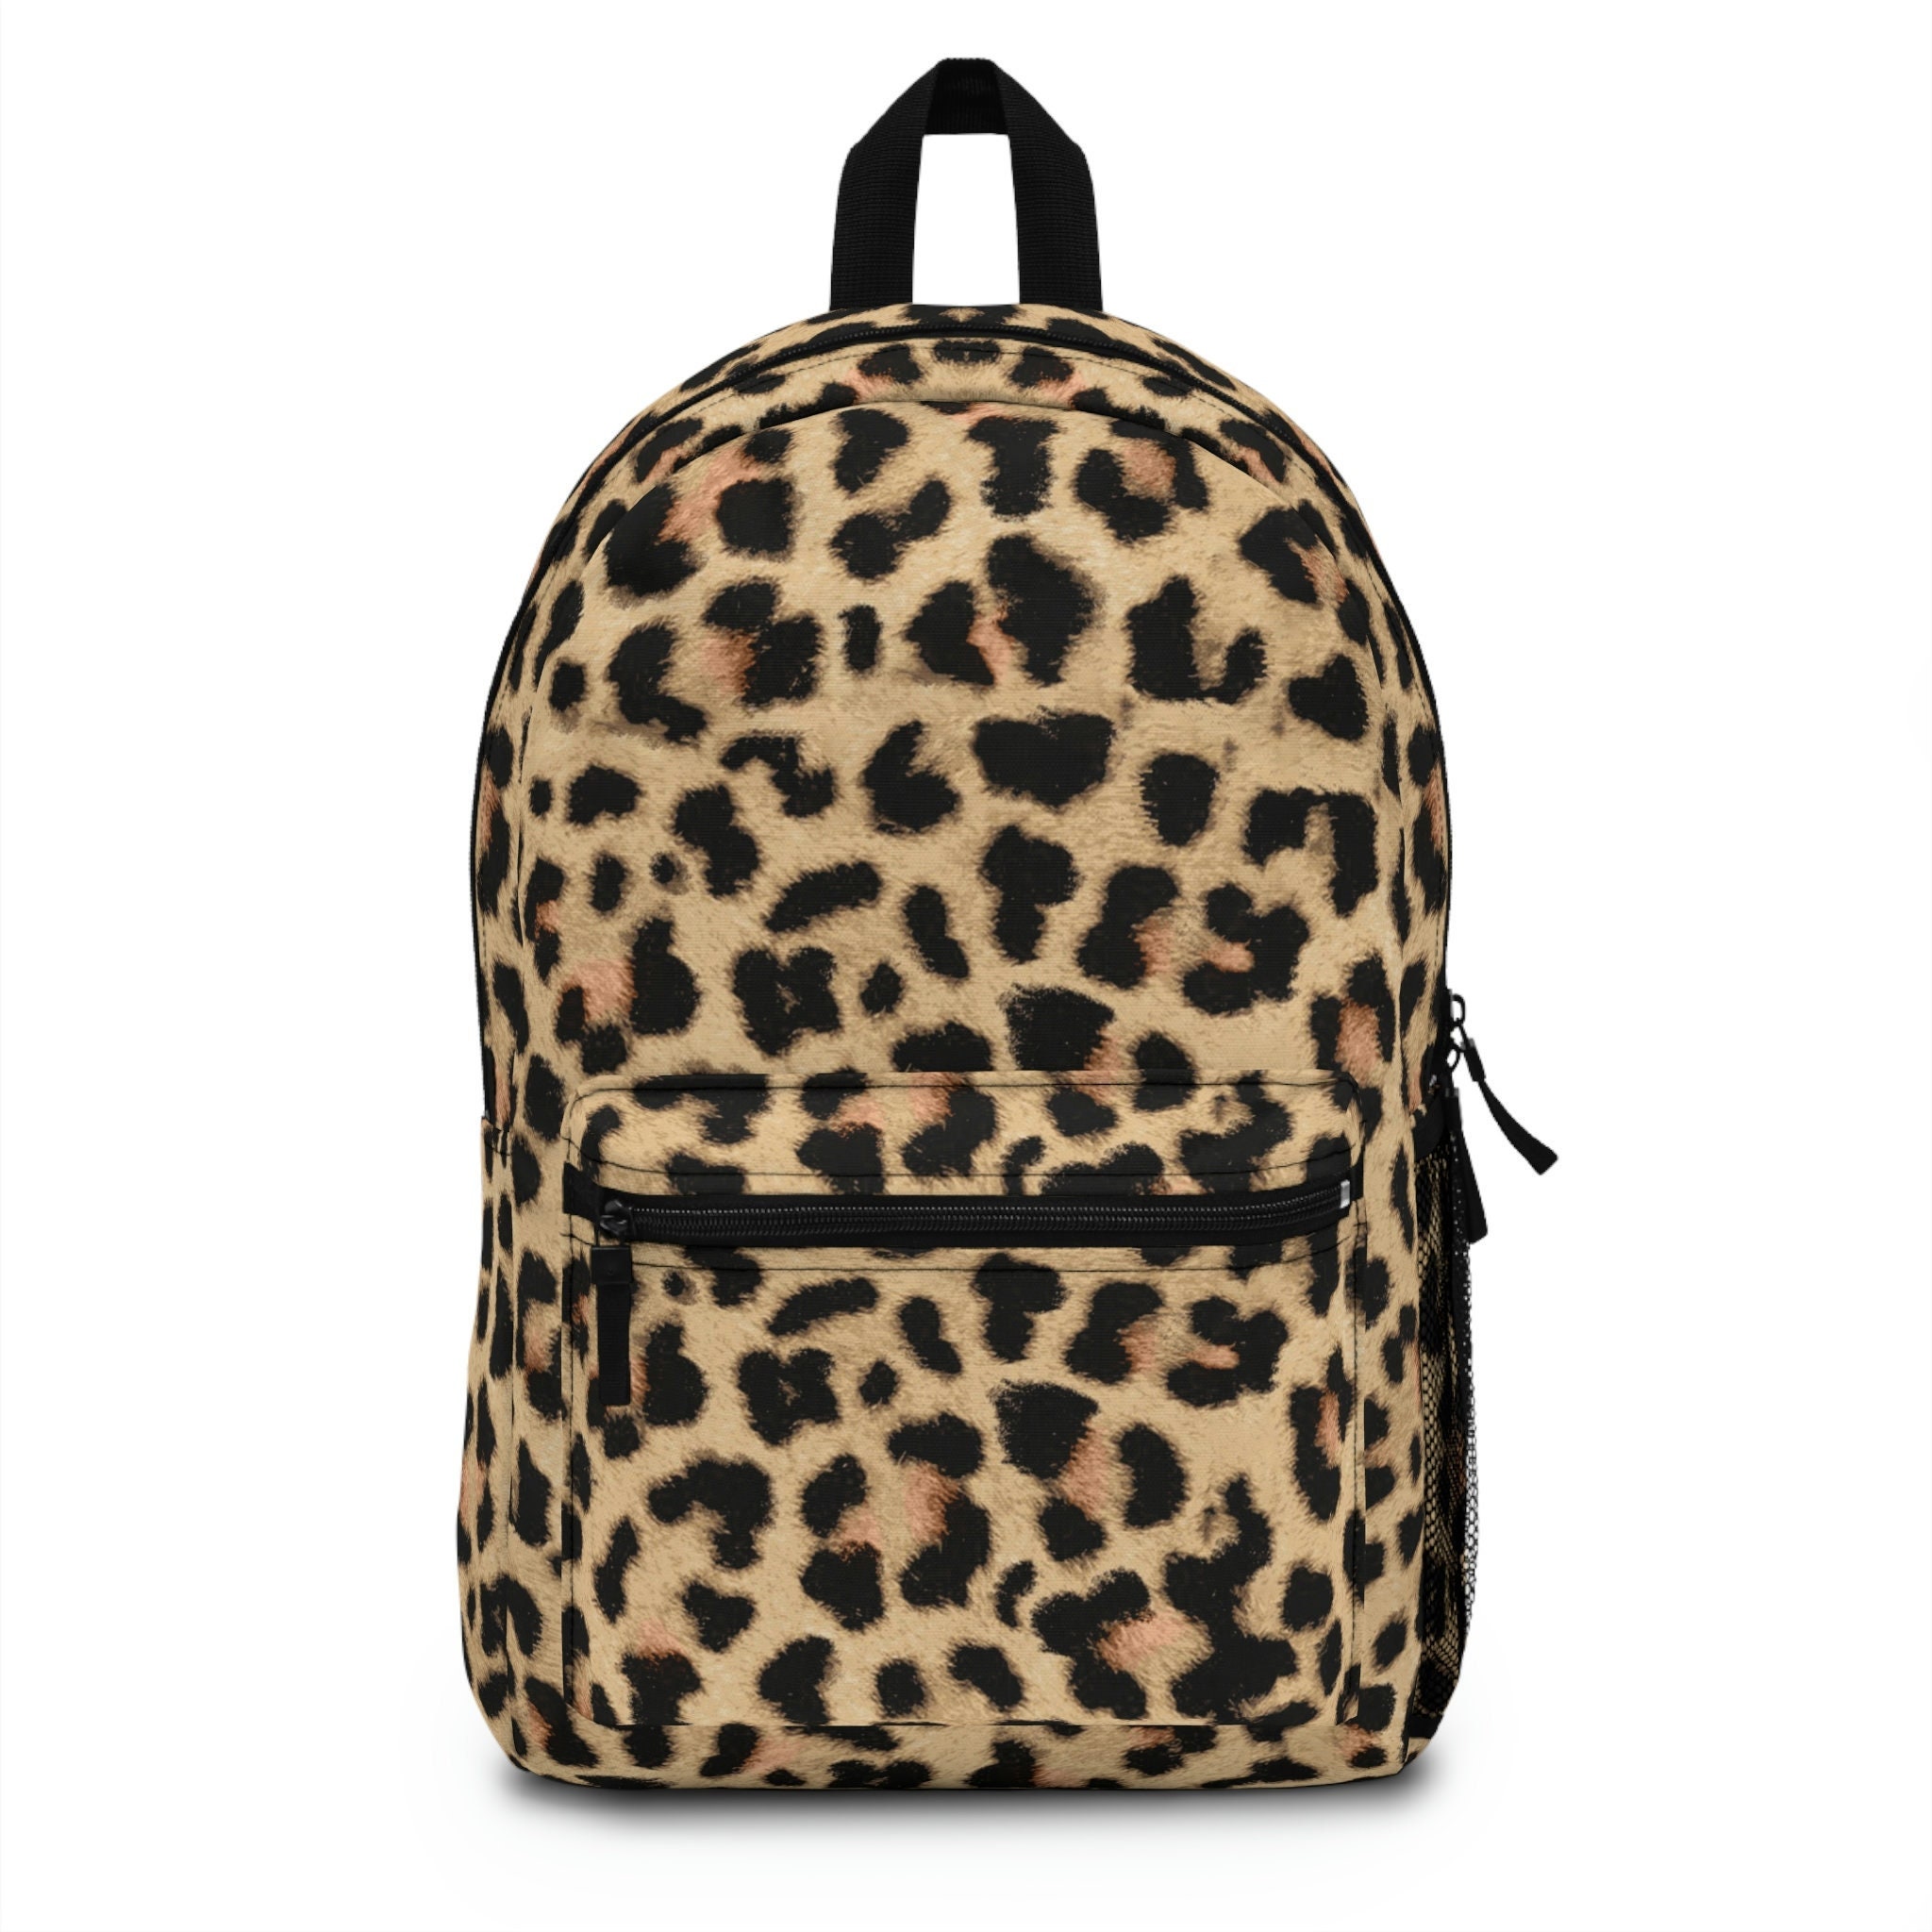 ADRIENNE VITTADINI Large BROWN Leopard Cheetah print Backpack | eBay